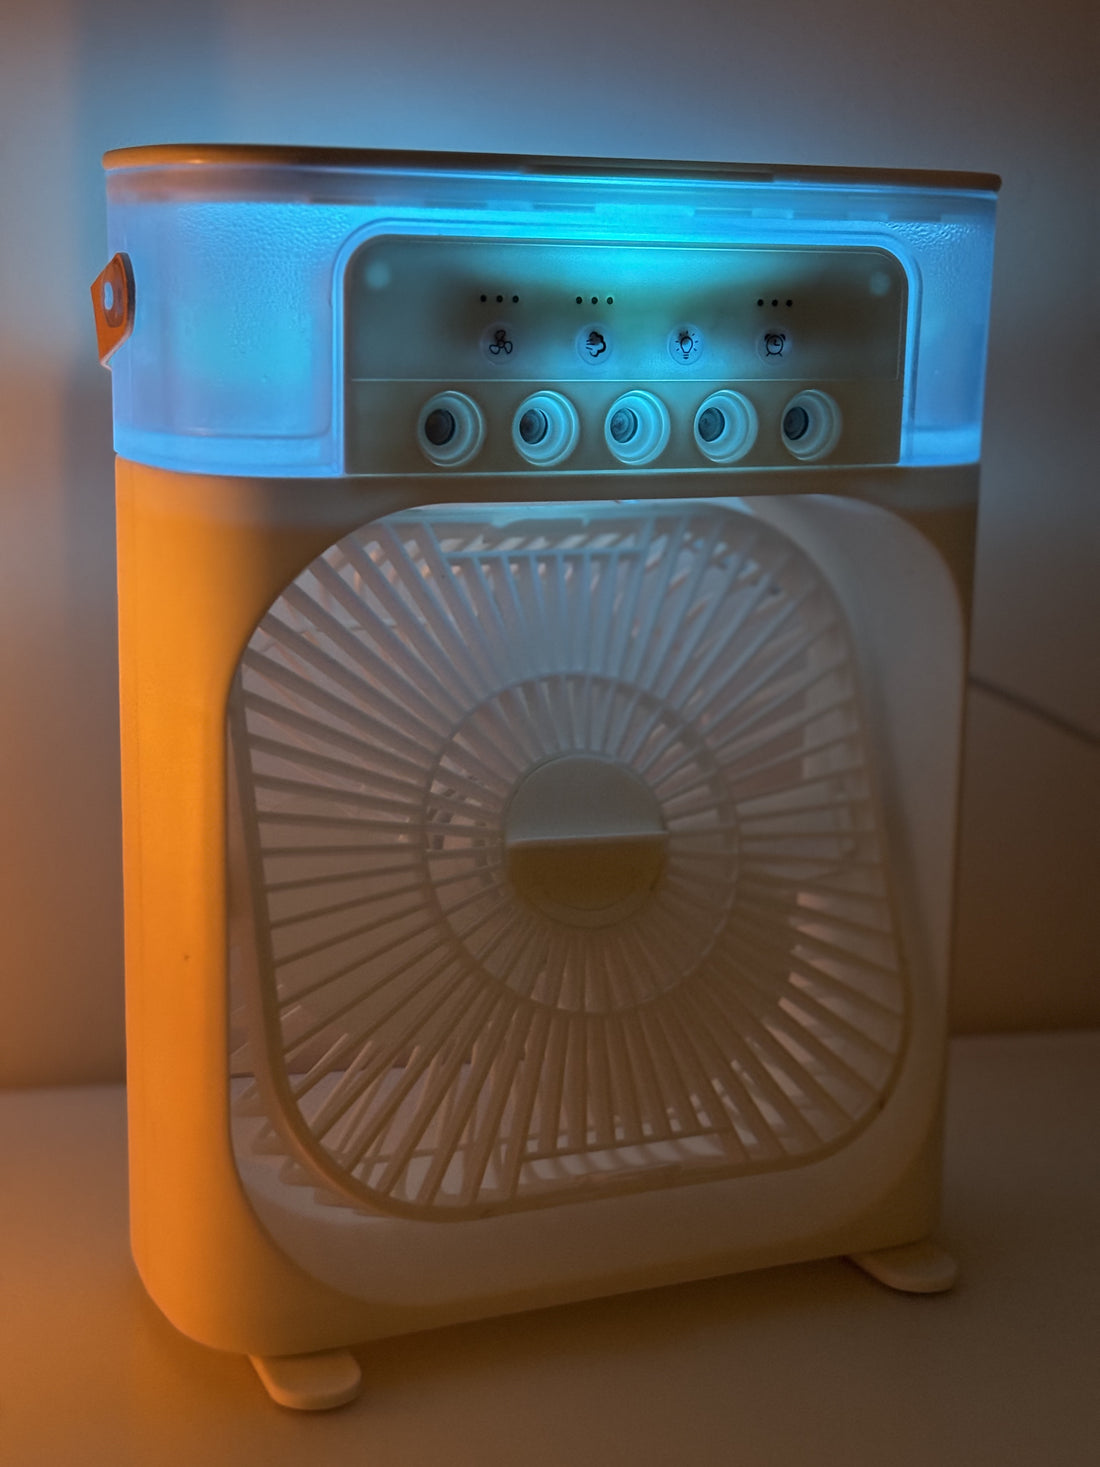 Glacier Breeze™️ Portable Cooling Fan